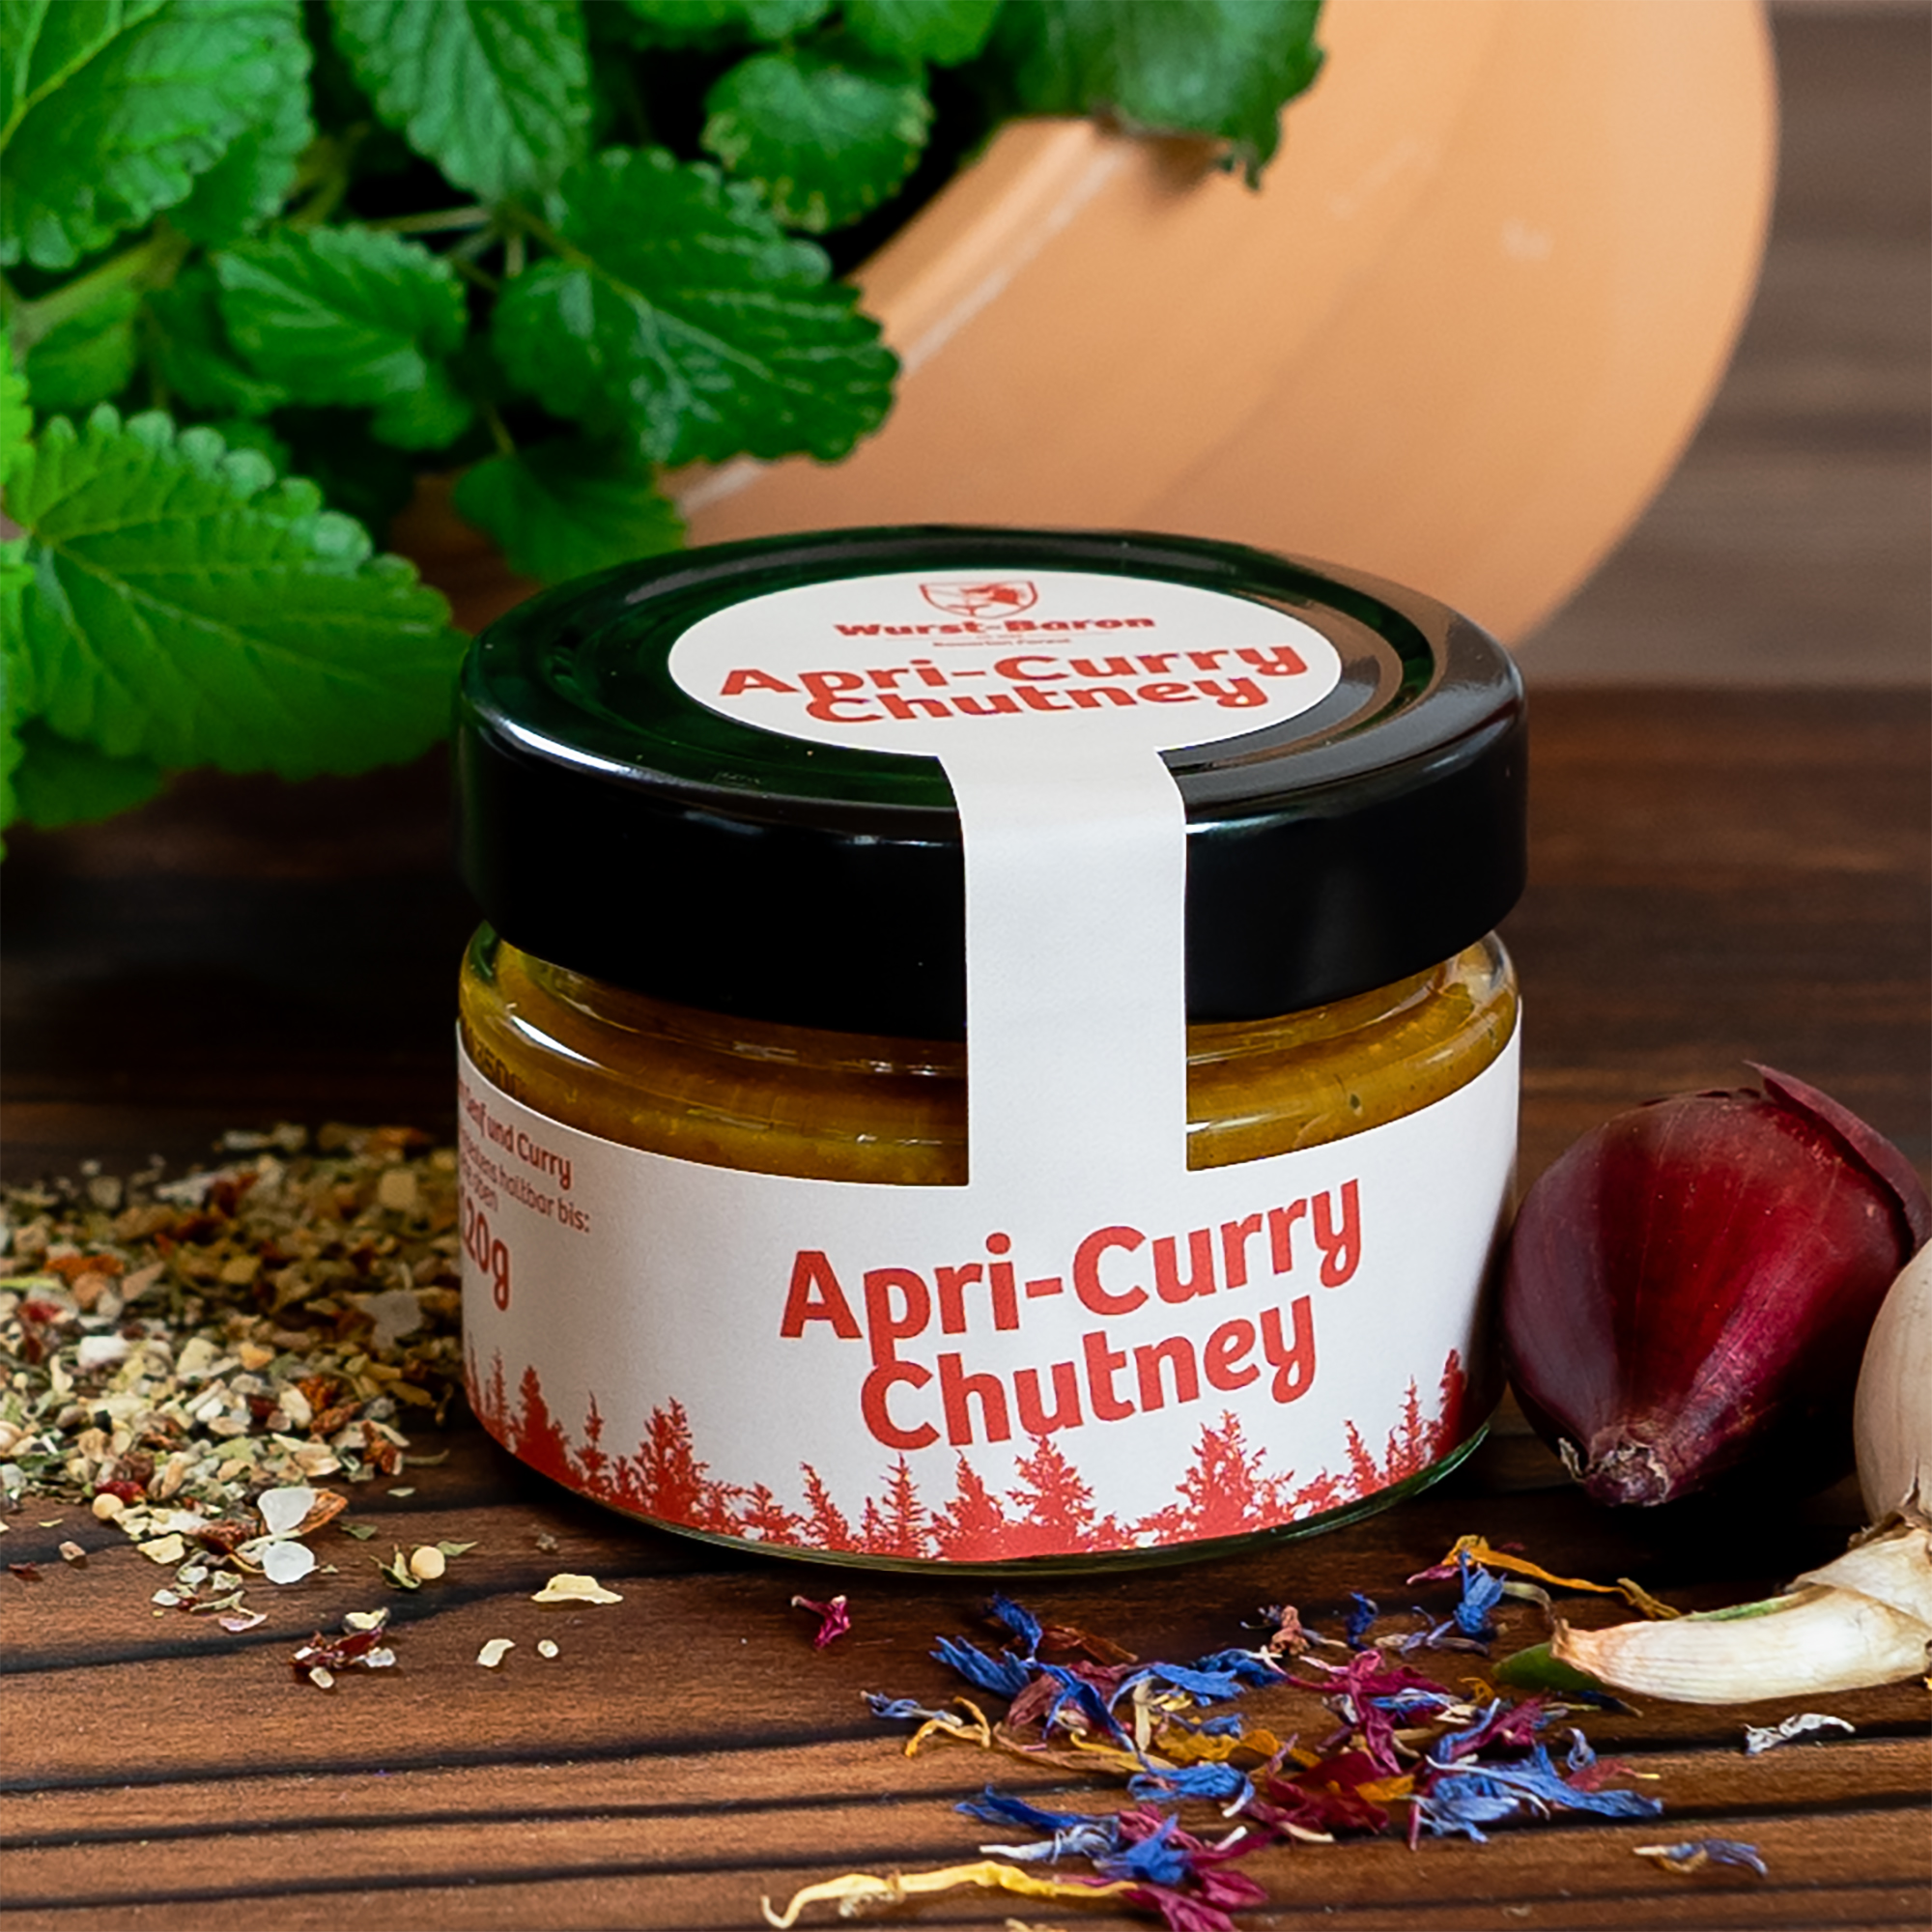 Wurstbarons Apri-Curry-Chutney